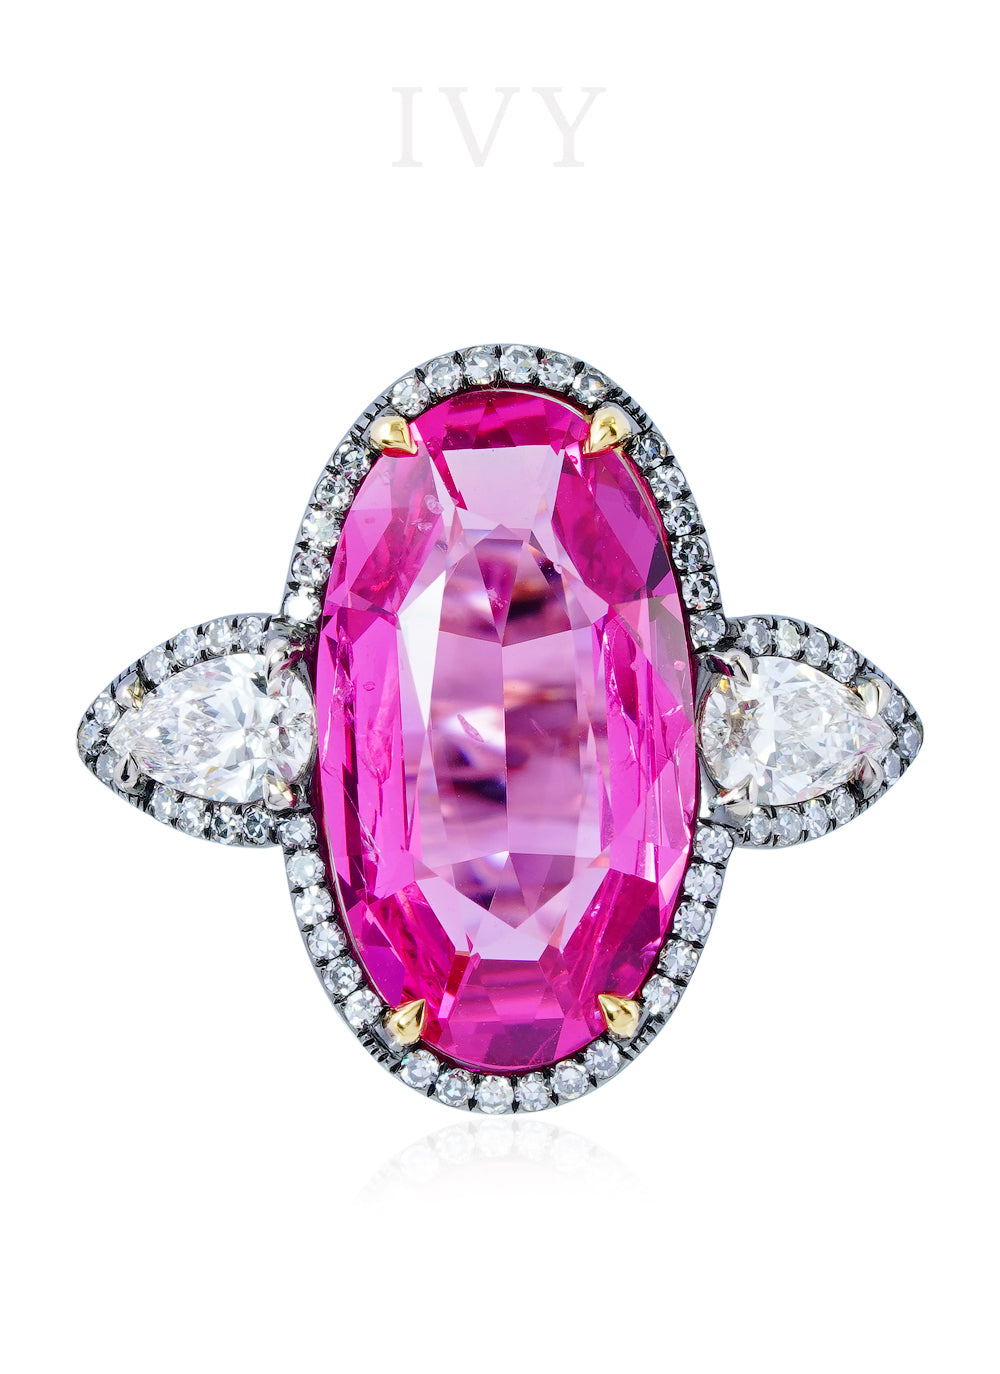 Vivid Pink Spinel Burma and Diamond Ring